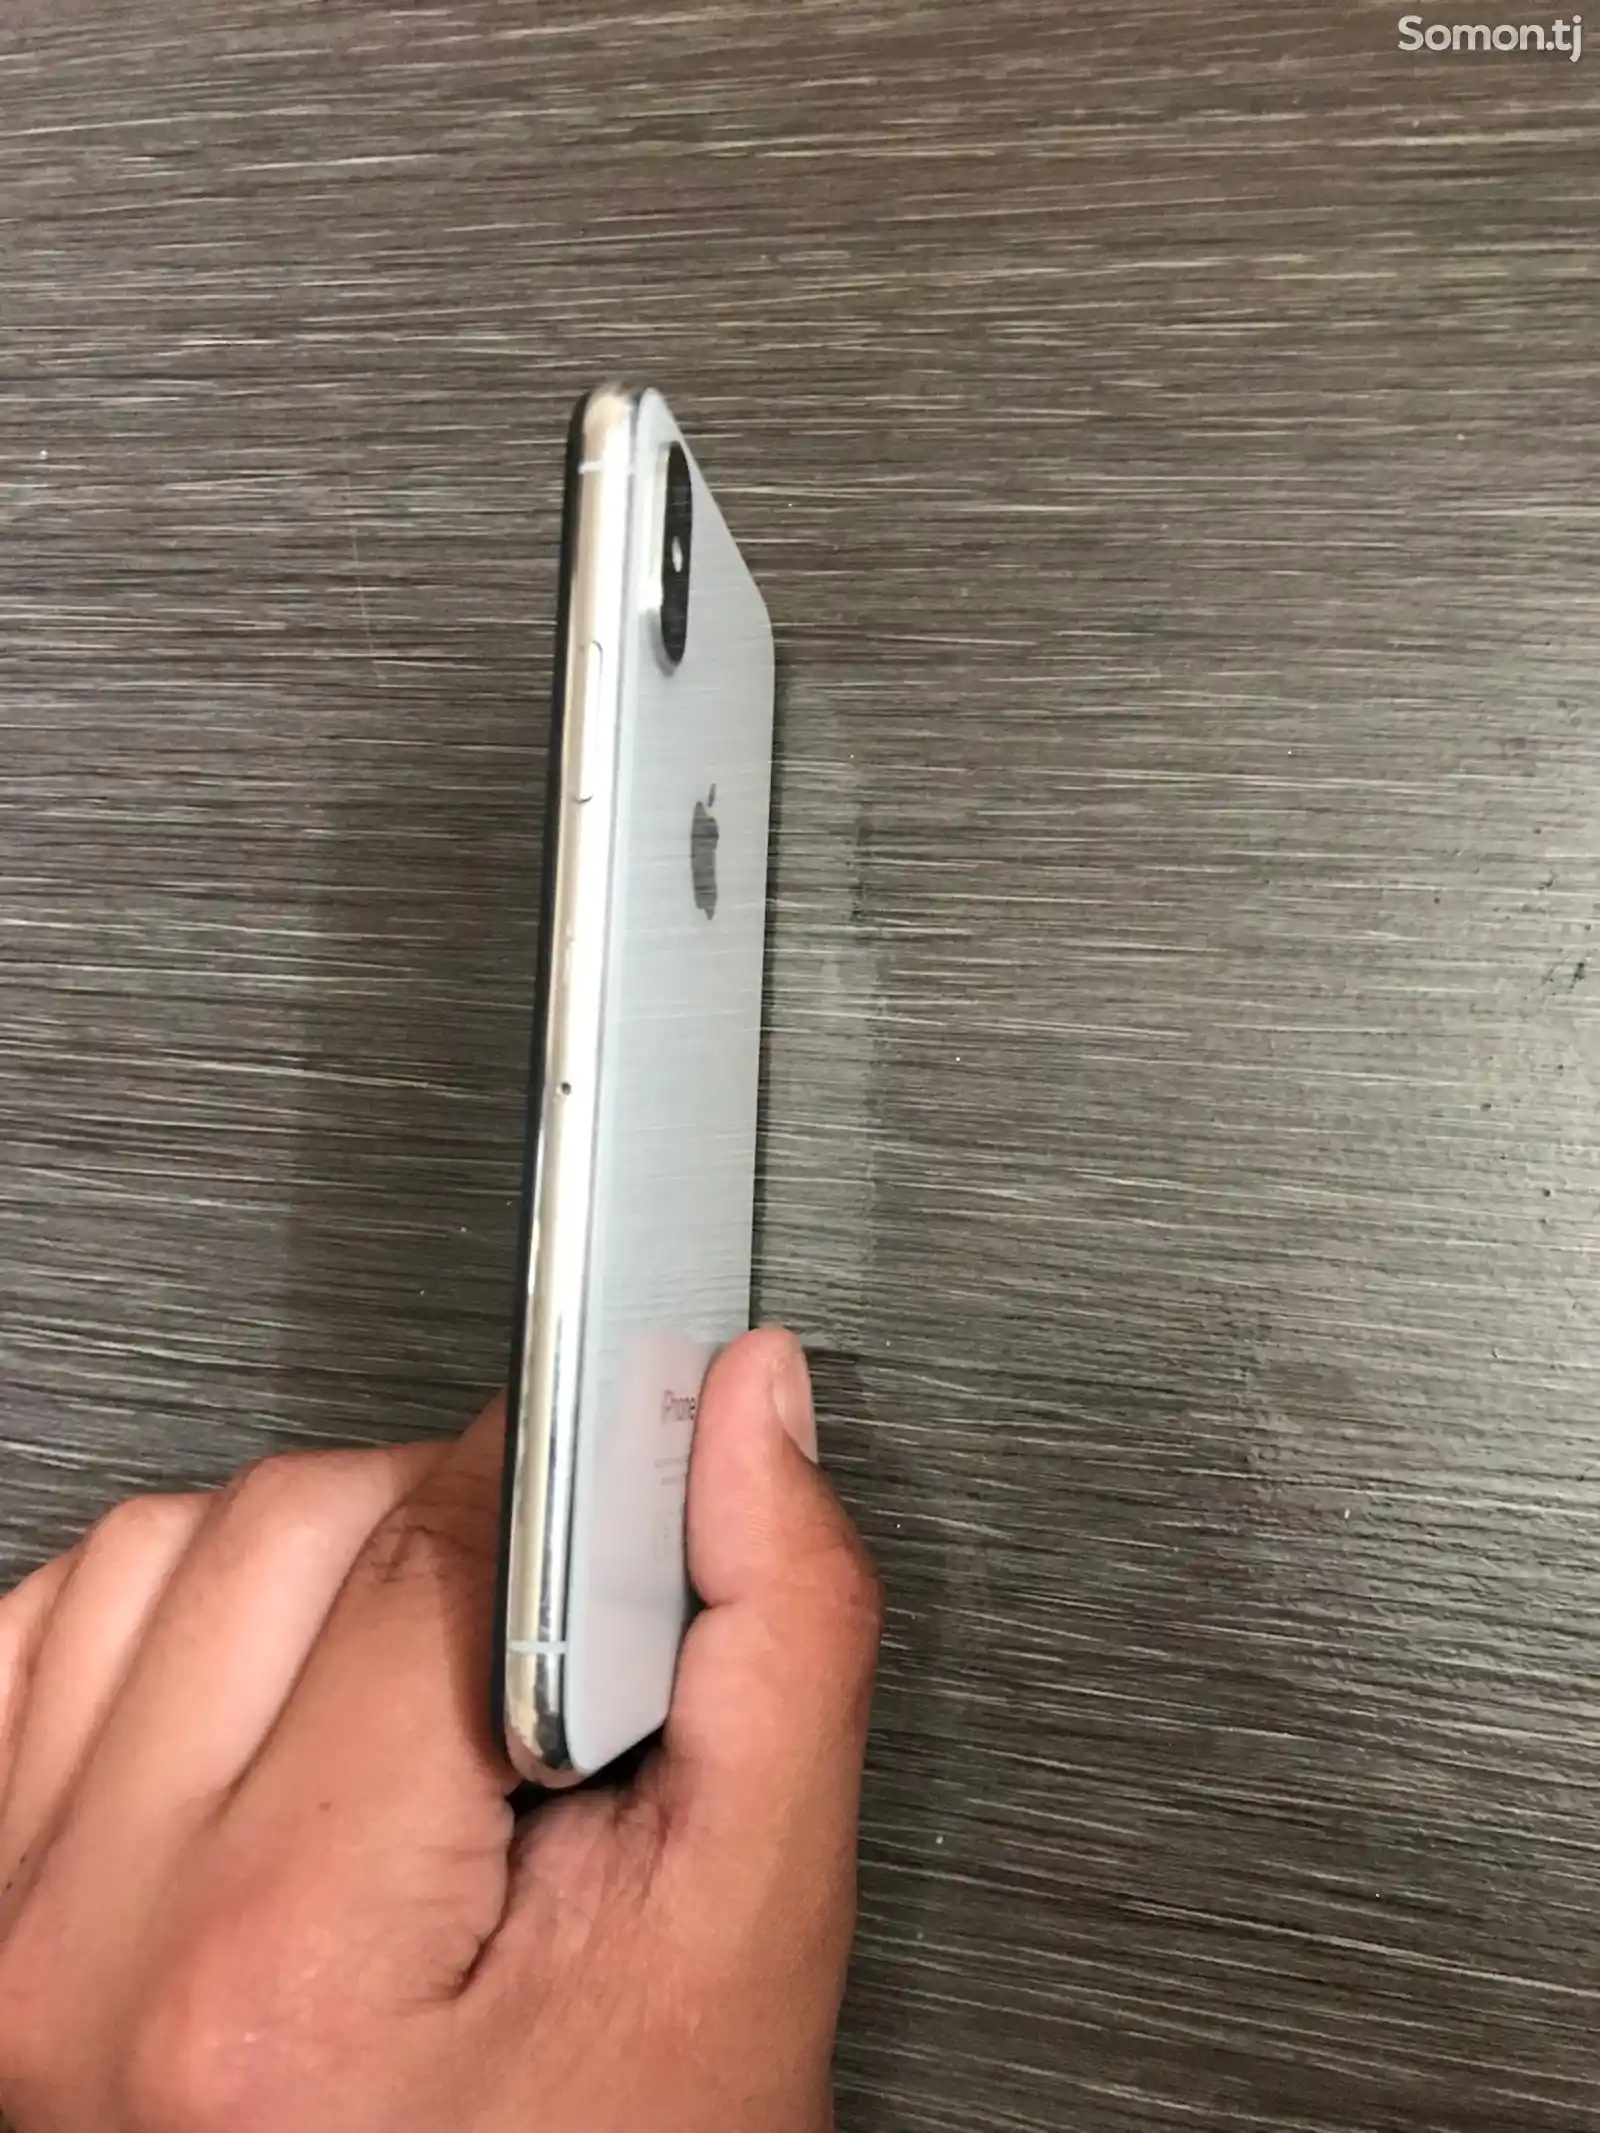 Apple iPhone Xs, 64 gb, Silver-3